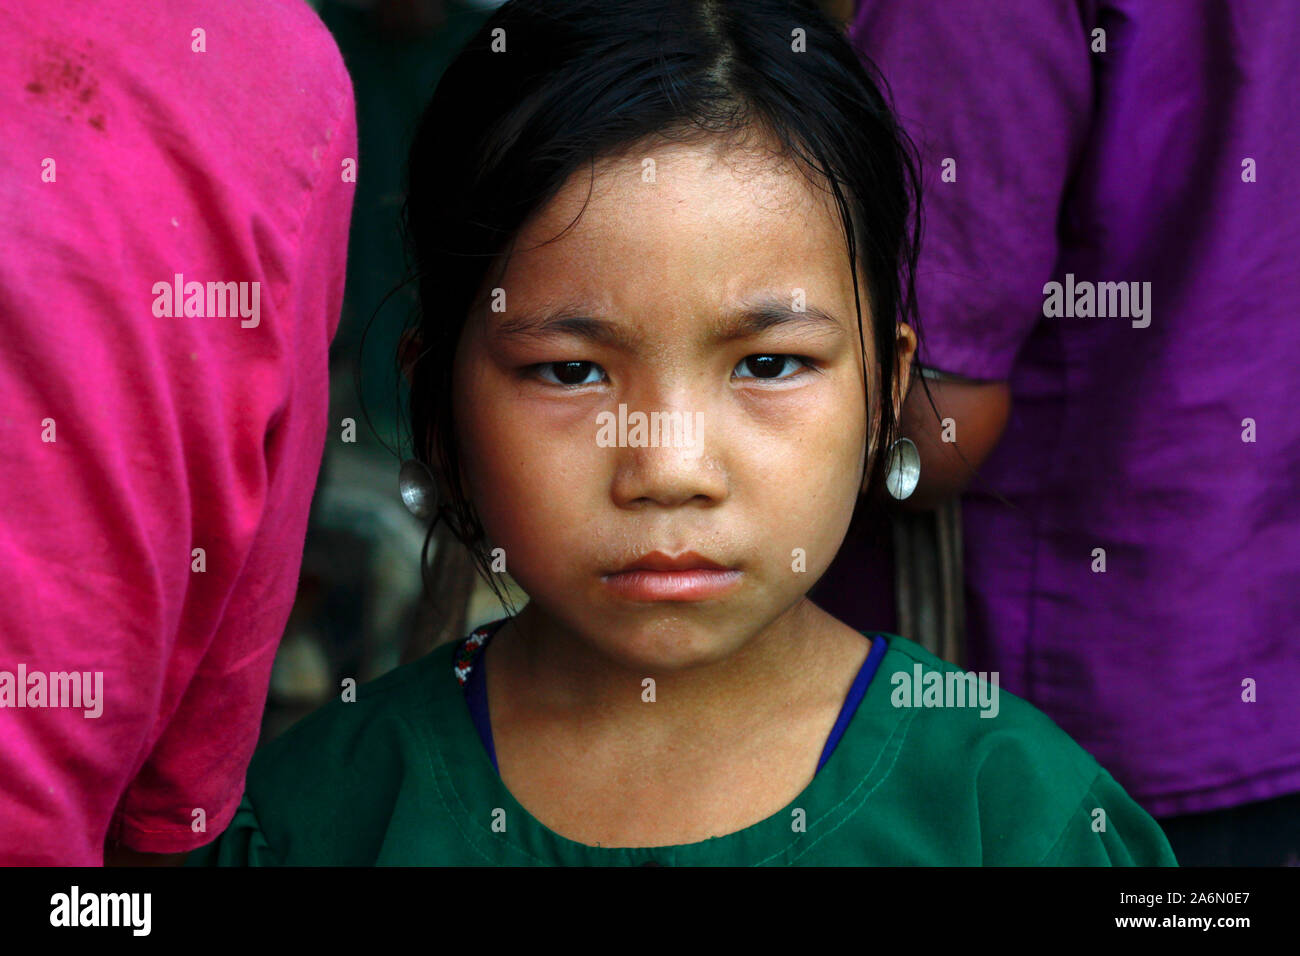 https://c8.alamy.com/comp/2A6N0E7/a-little-girl-from-the-ethnic-murong-also-mro-or-mru-community-in-lama-bandarban-bangladesh-july-29-2010-2A6N0E7.jpg